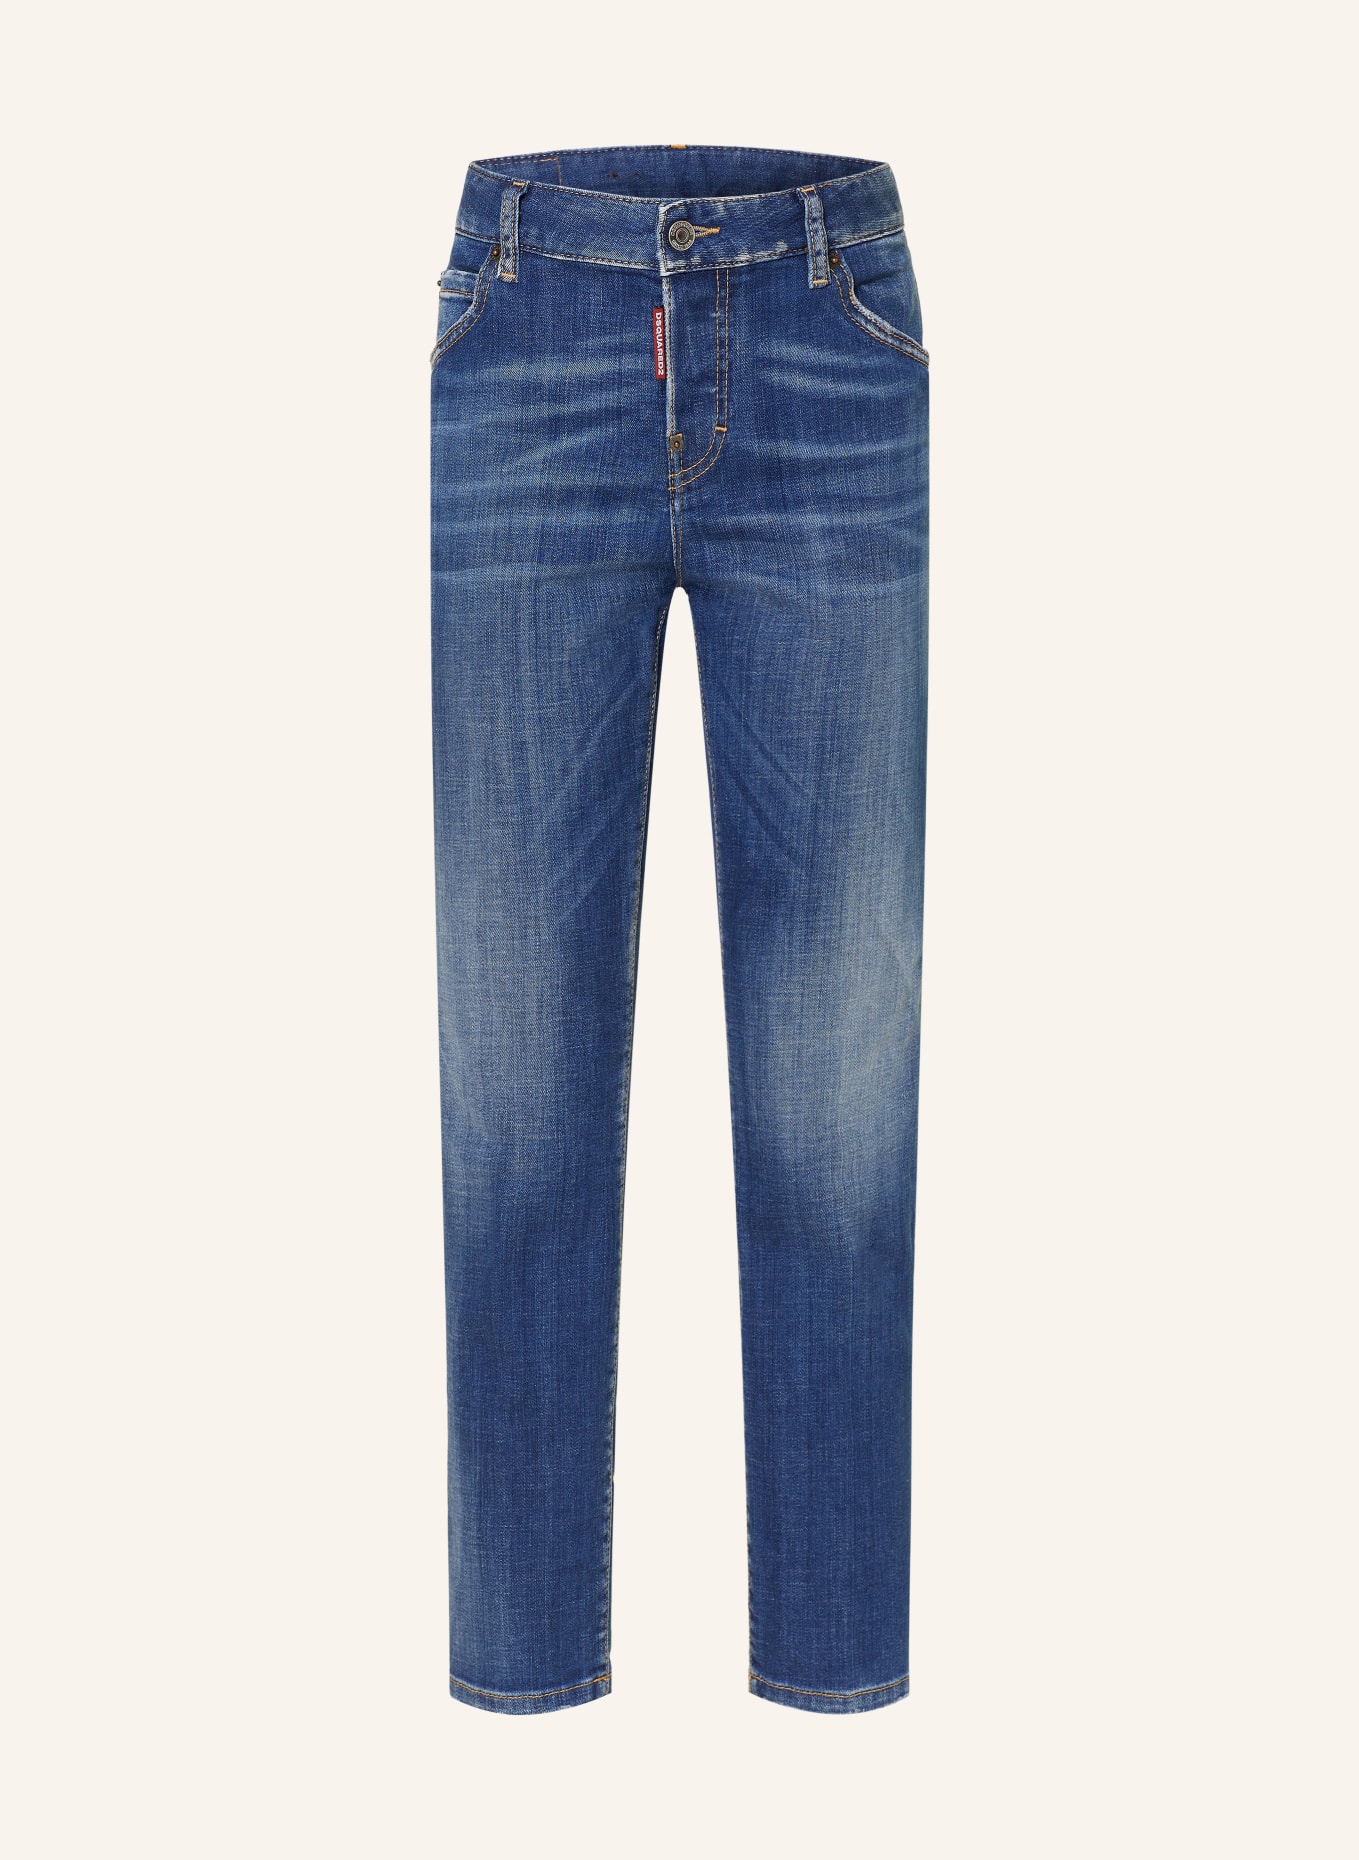 DSQUARED2 Skinny Jeans COOL GIRL, Farbe: 470 NAVY BLUE (Bild 1)